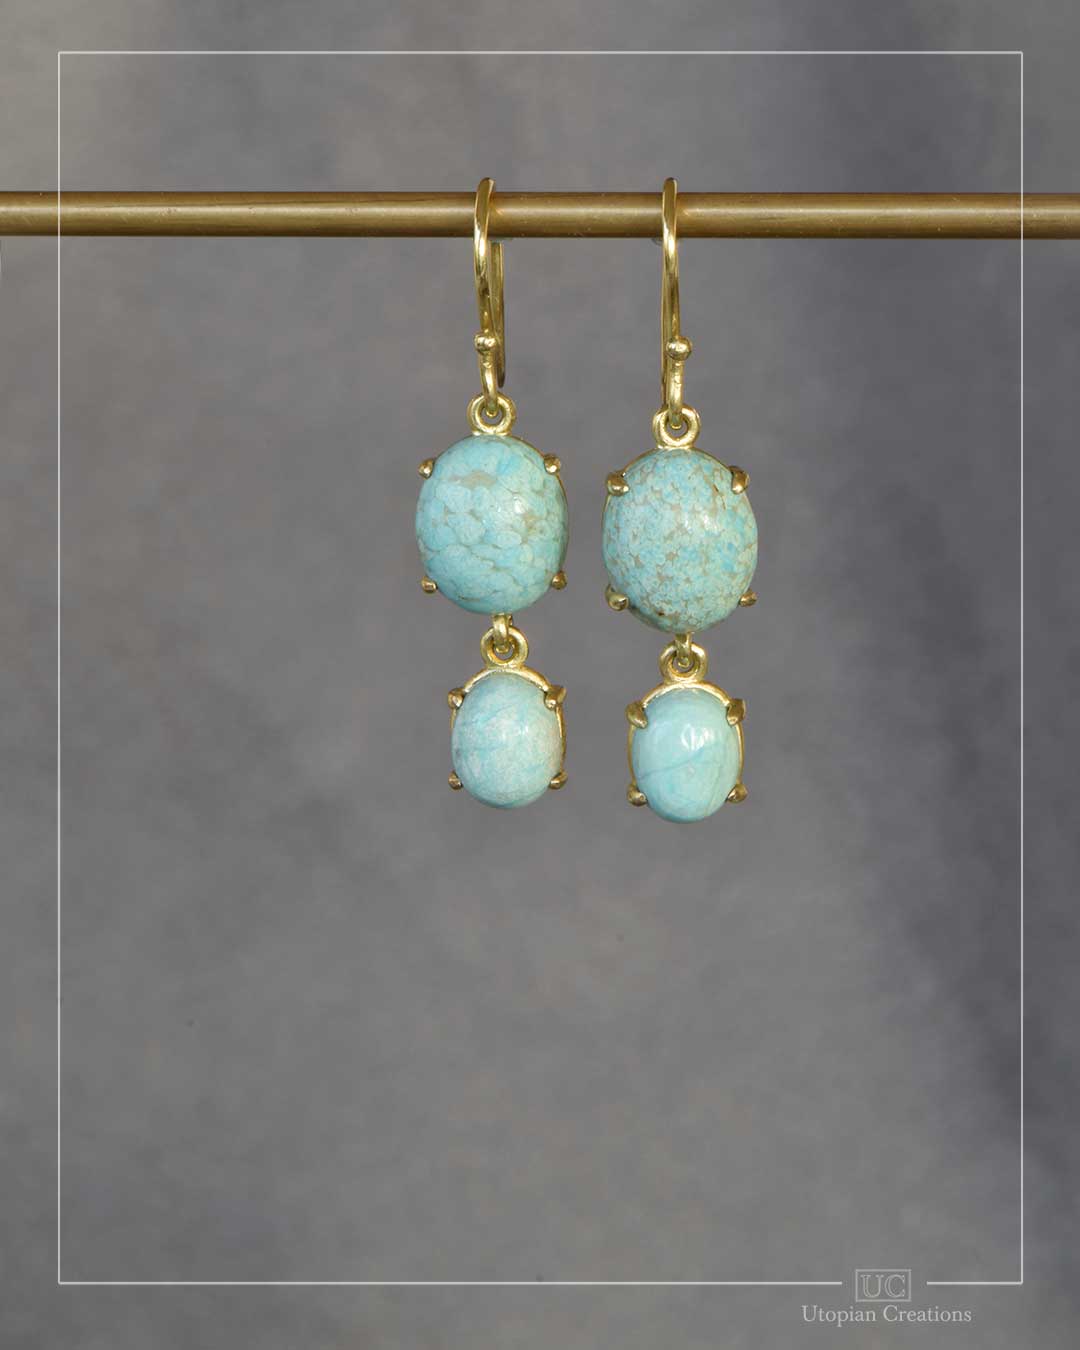 Juno double drop earrings featuring Australian Turquoise